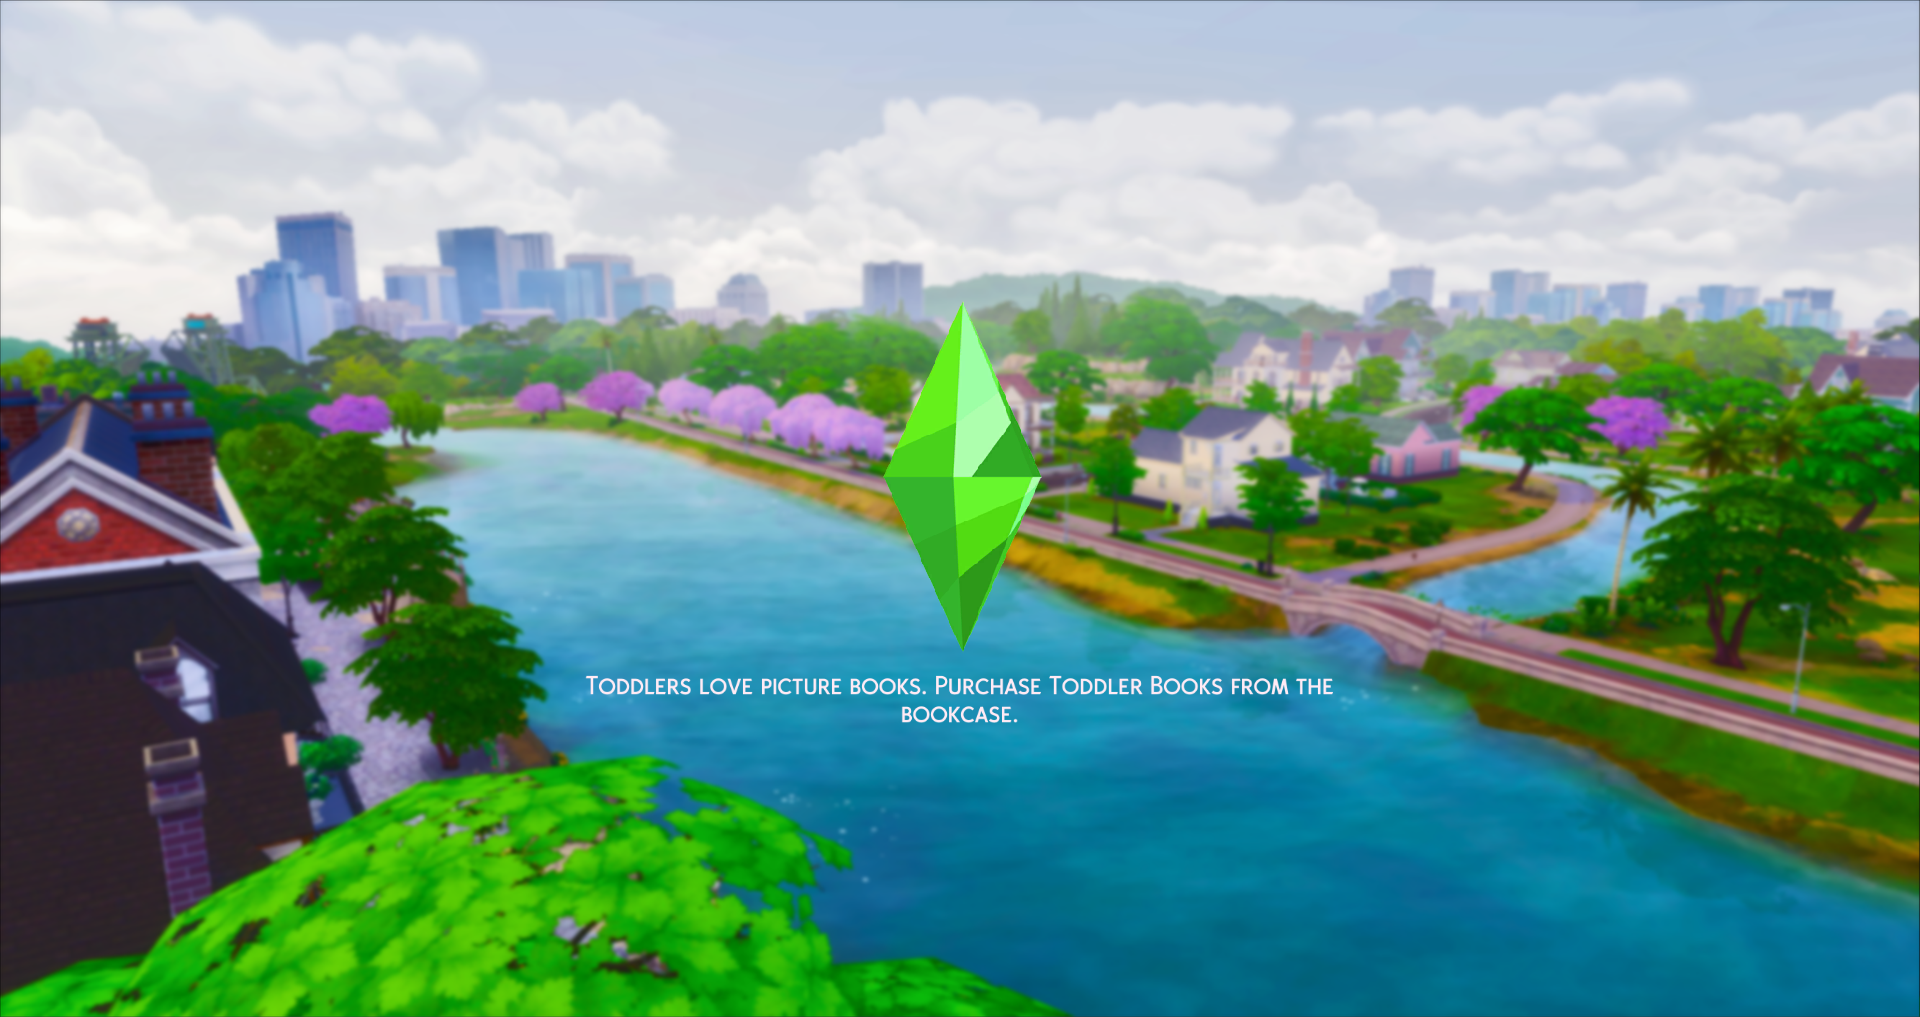 Sims 4 loading screen. SIMS 4 загрузочный экран. Симс 4 экран. Симс 4 экран загрузки. The SIMS 3 загрузочный экран.